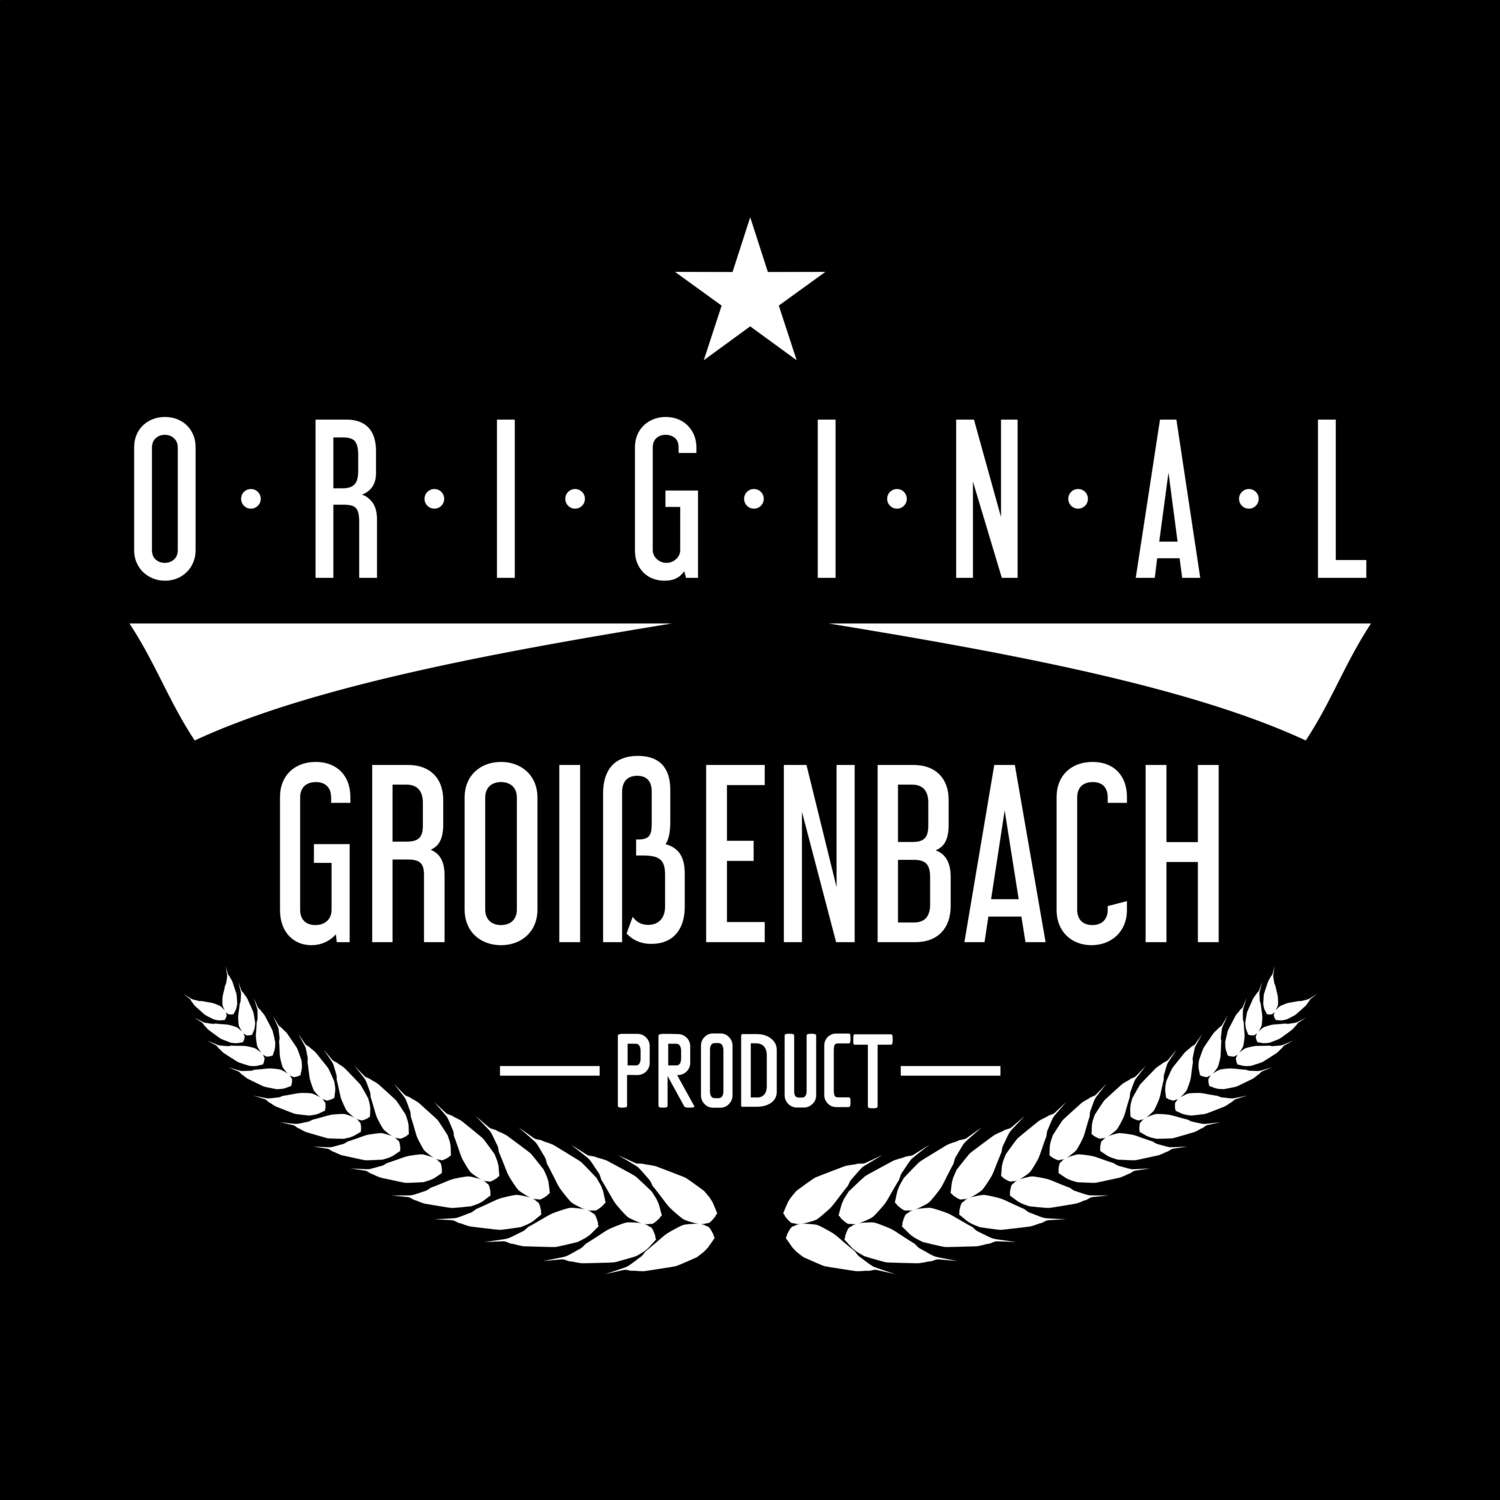 Groißenbach T-Shirt »Original Product«